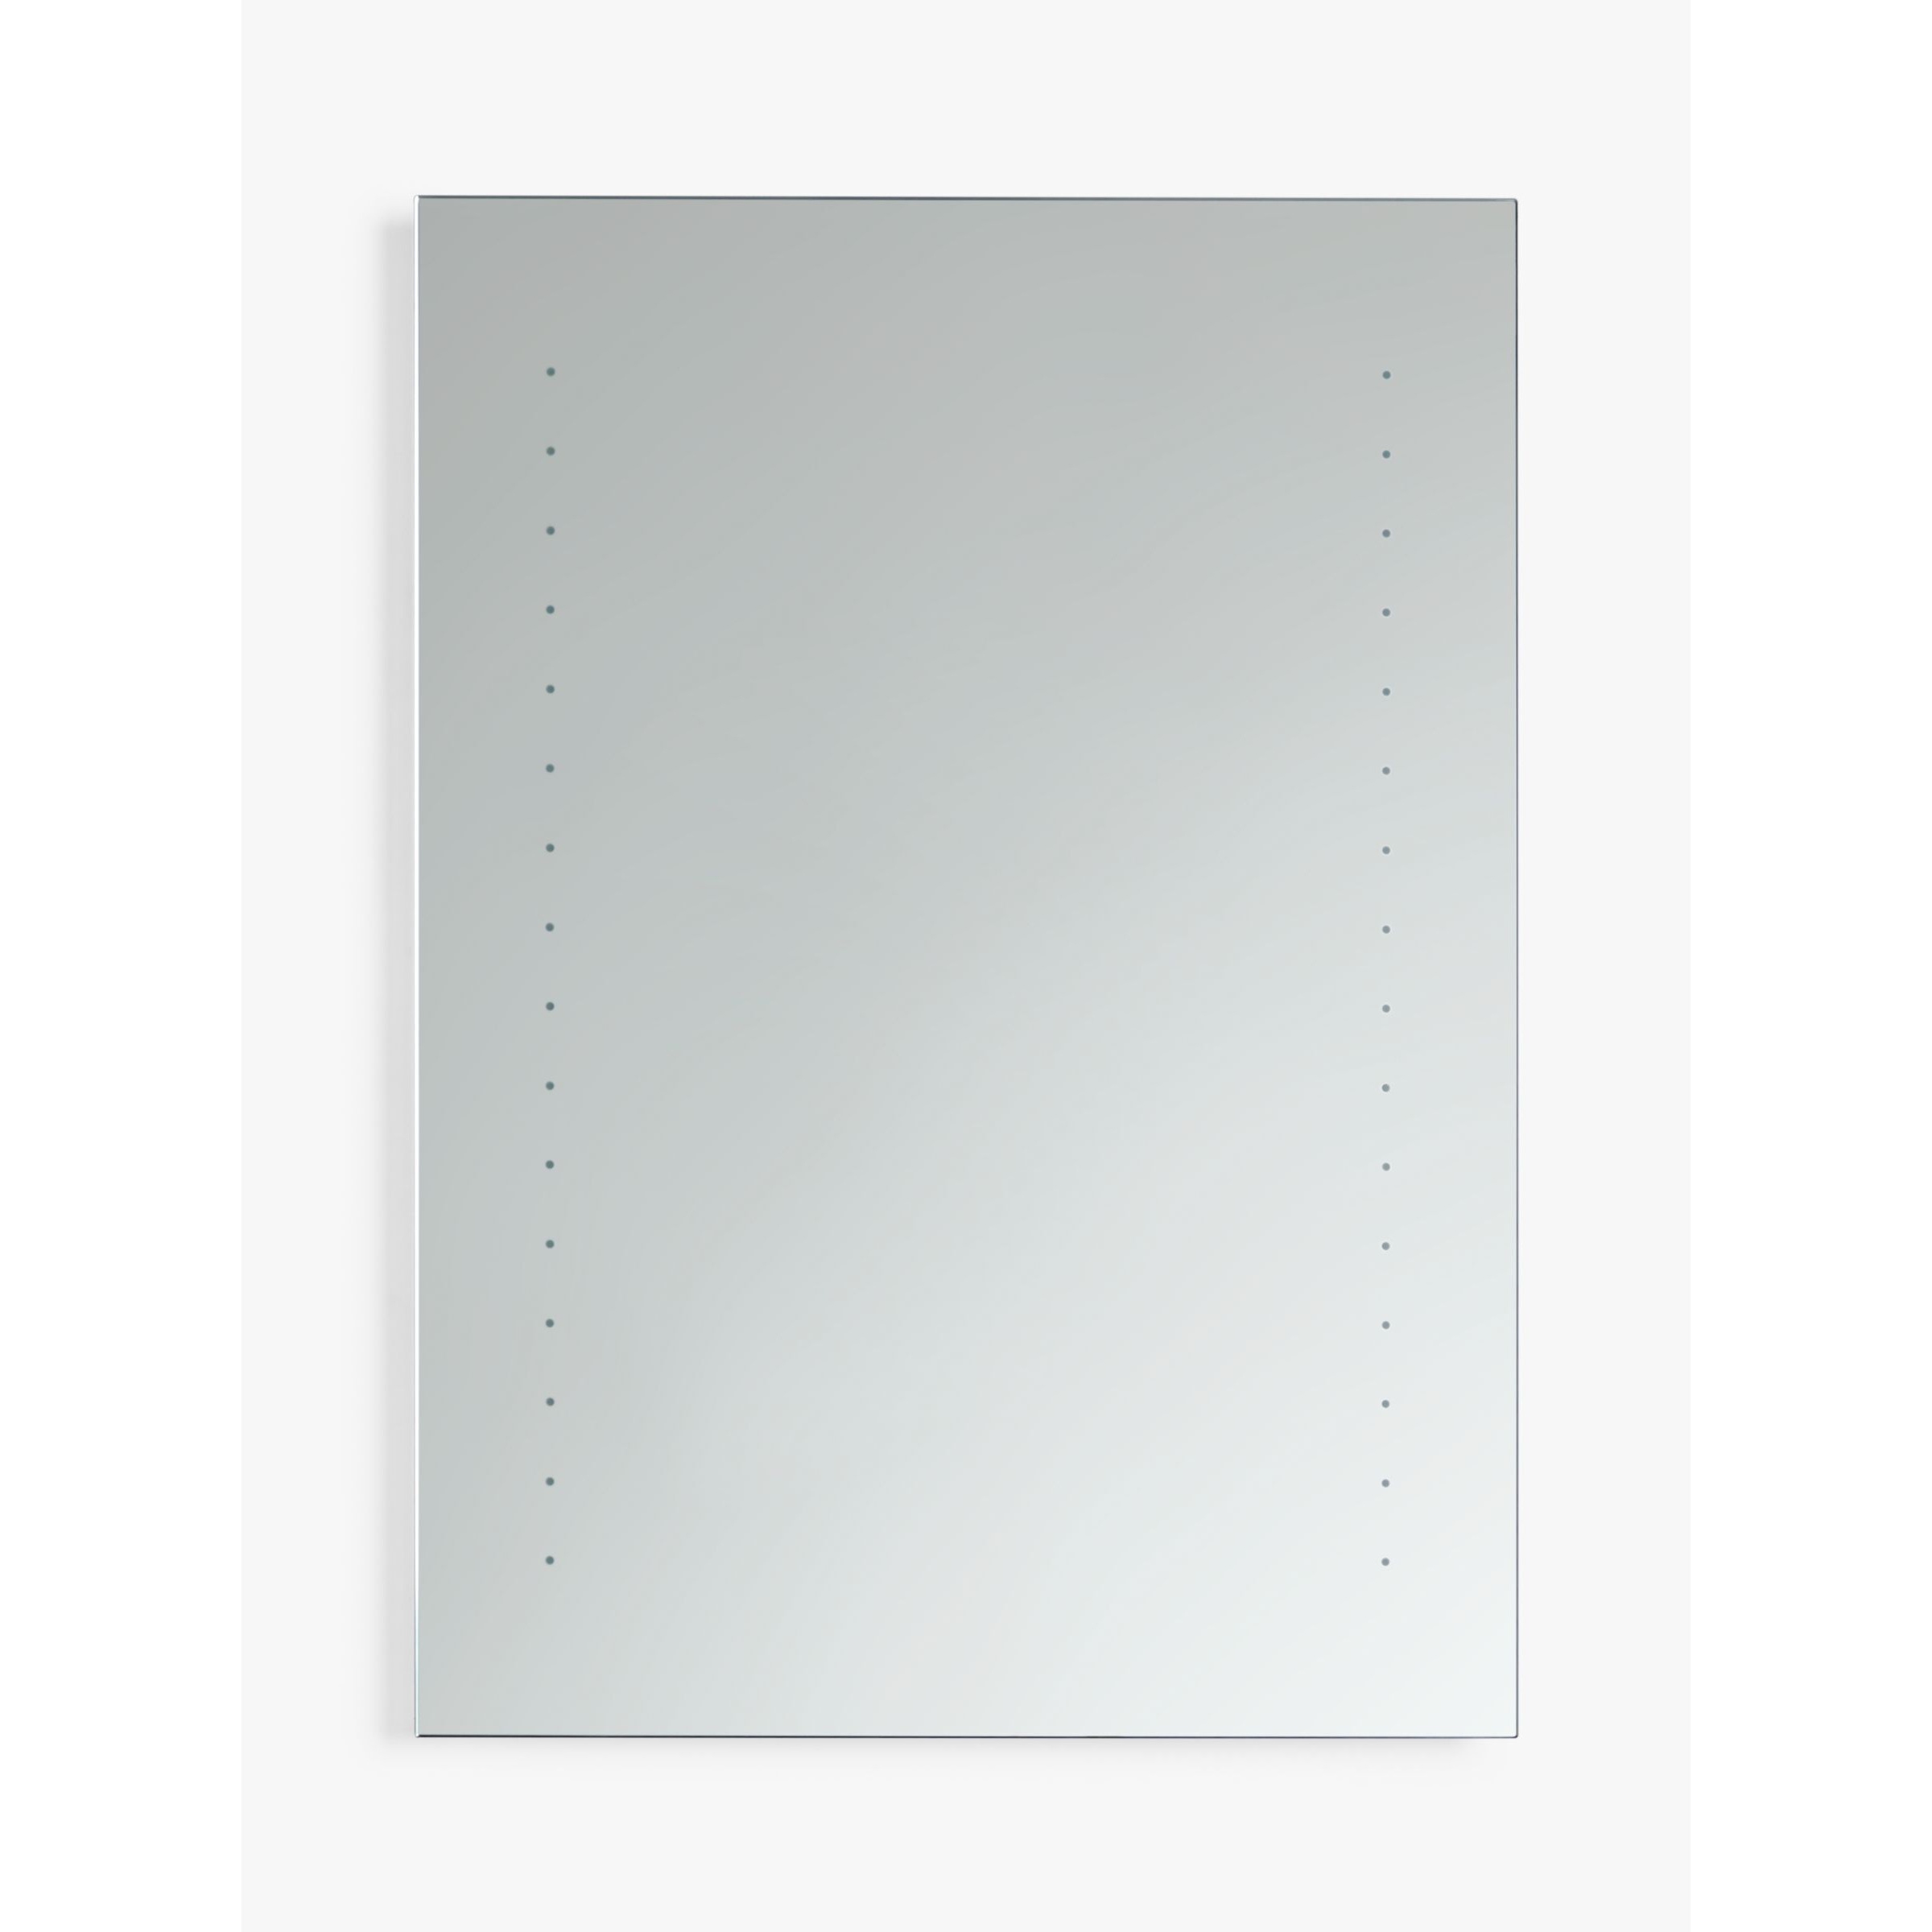 John Lewis Pixel Wall Mounted Illuminated Bathroom Mirror, Medium - image 1